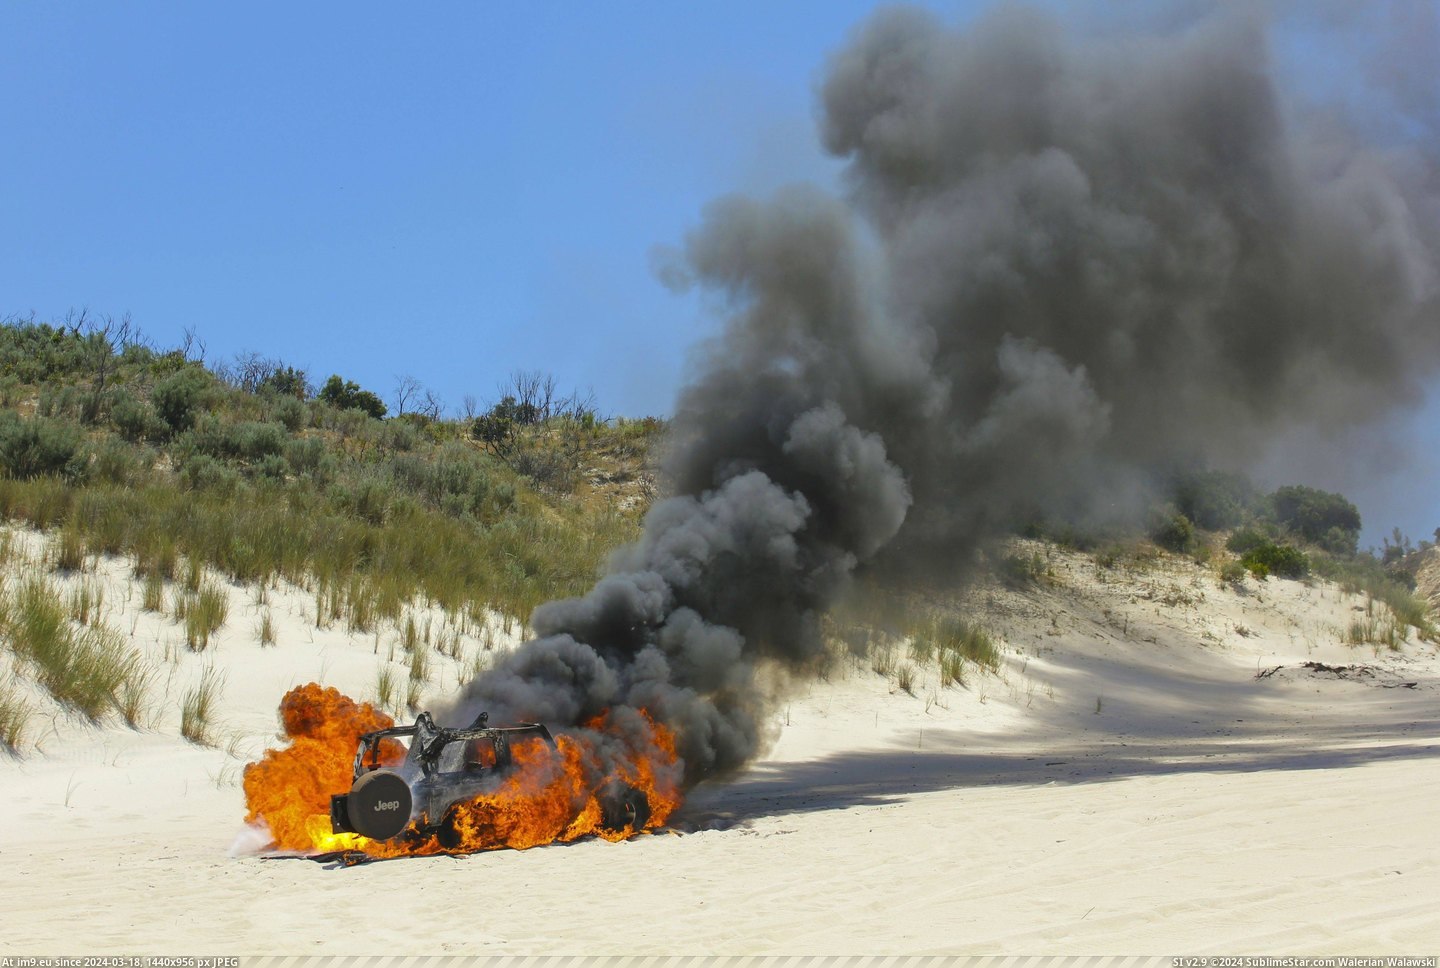 #Interested #Wrangler #Explodes #Jeep [Pics] Wrangler explodes, Jeep not interested 5 Pic. (Изображение из альбом My r/PICS favs))